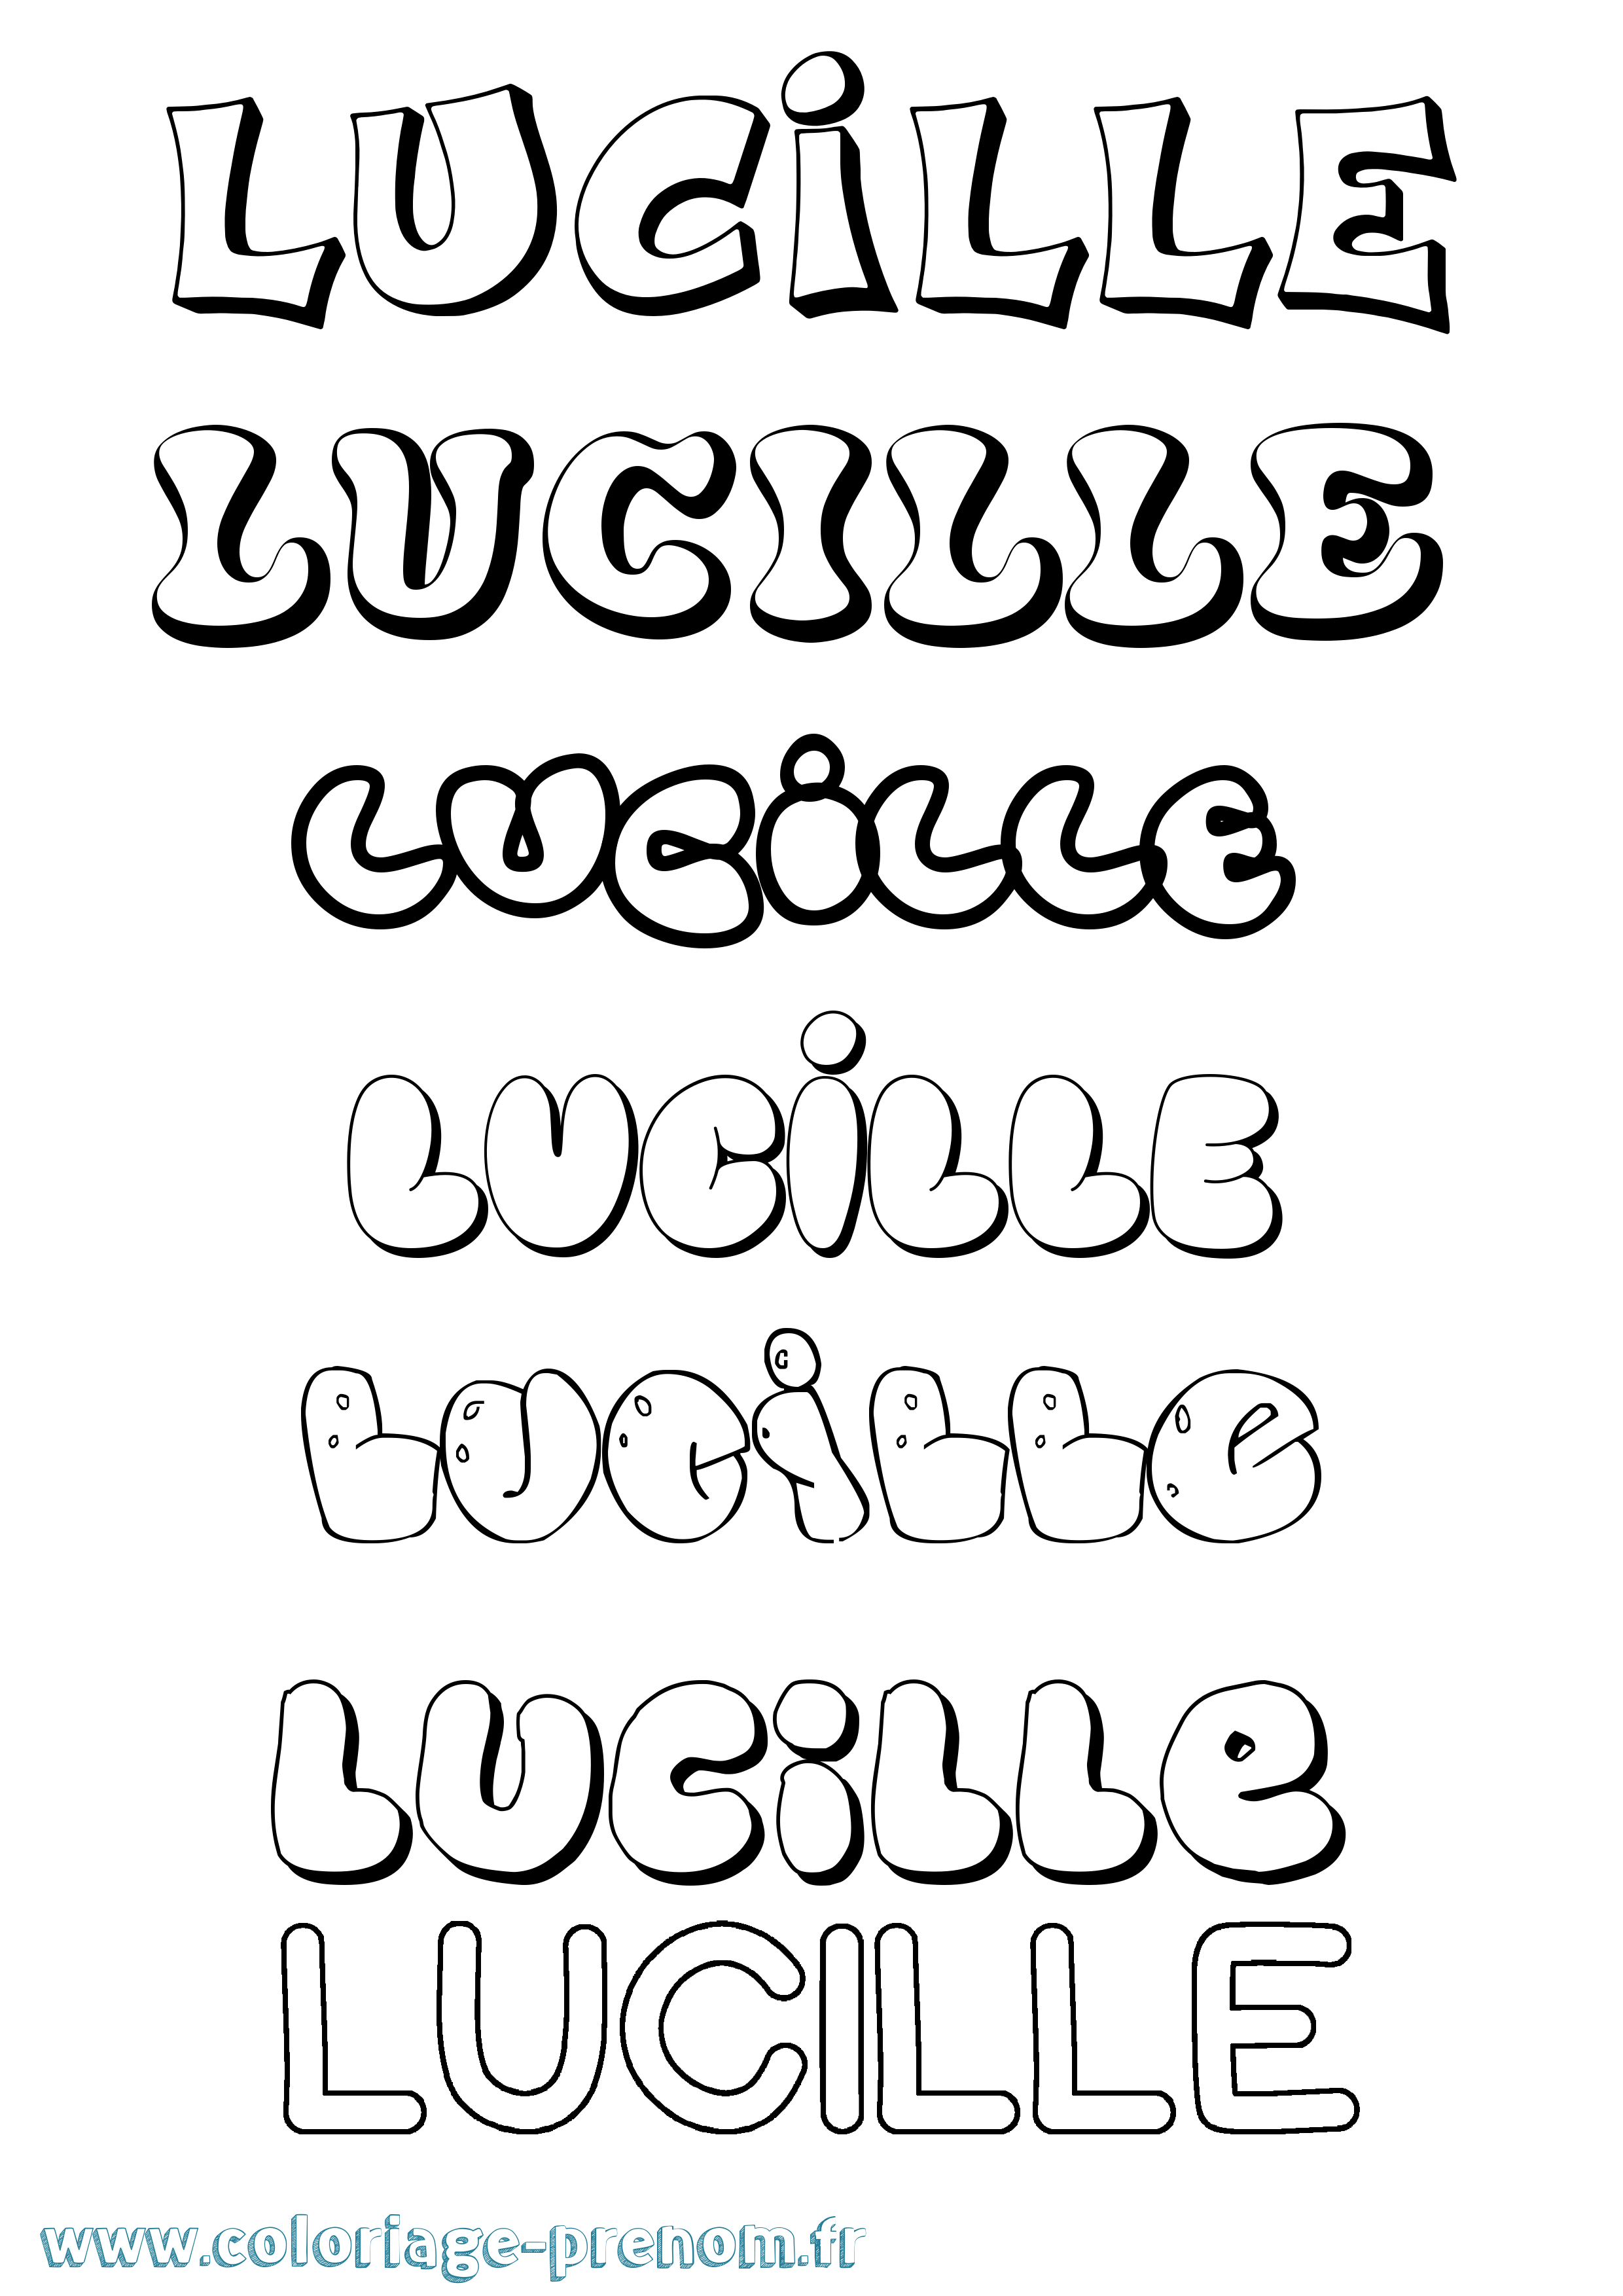 Coloriage prénom Lucille